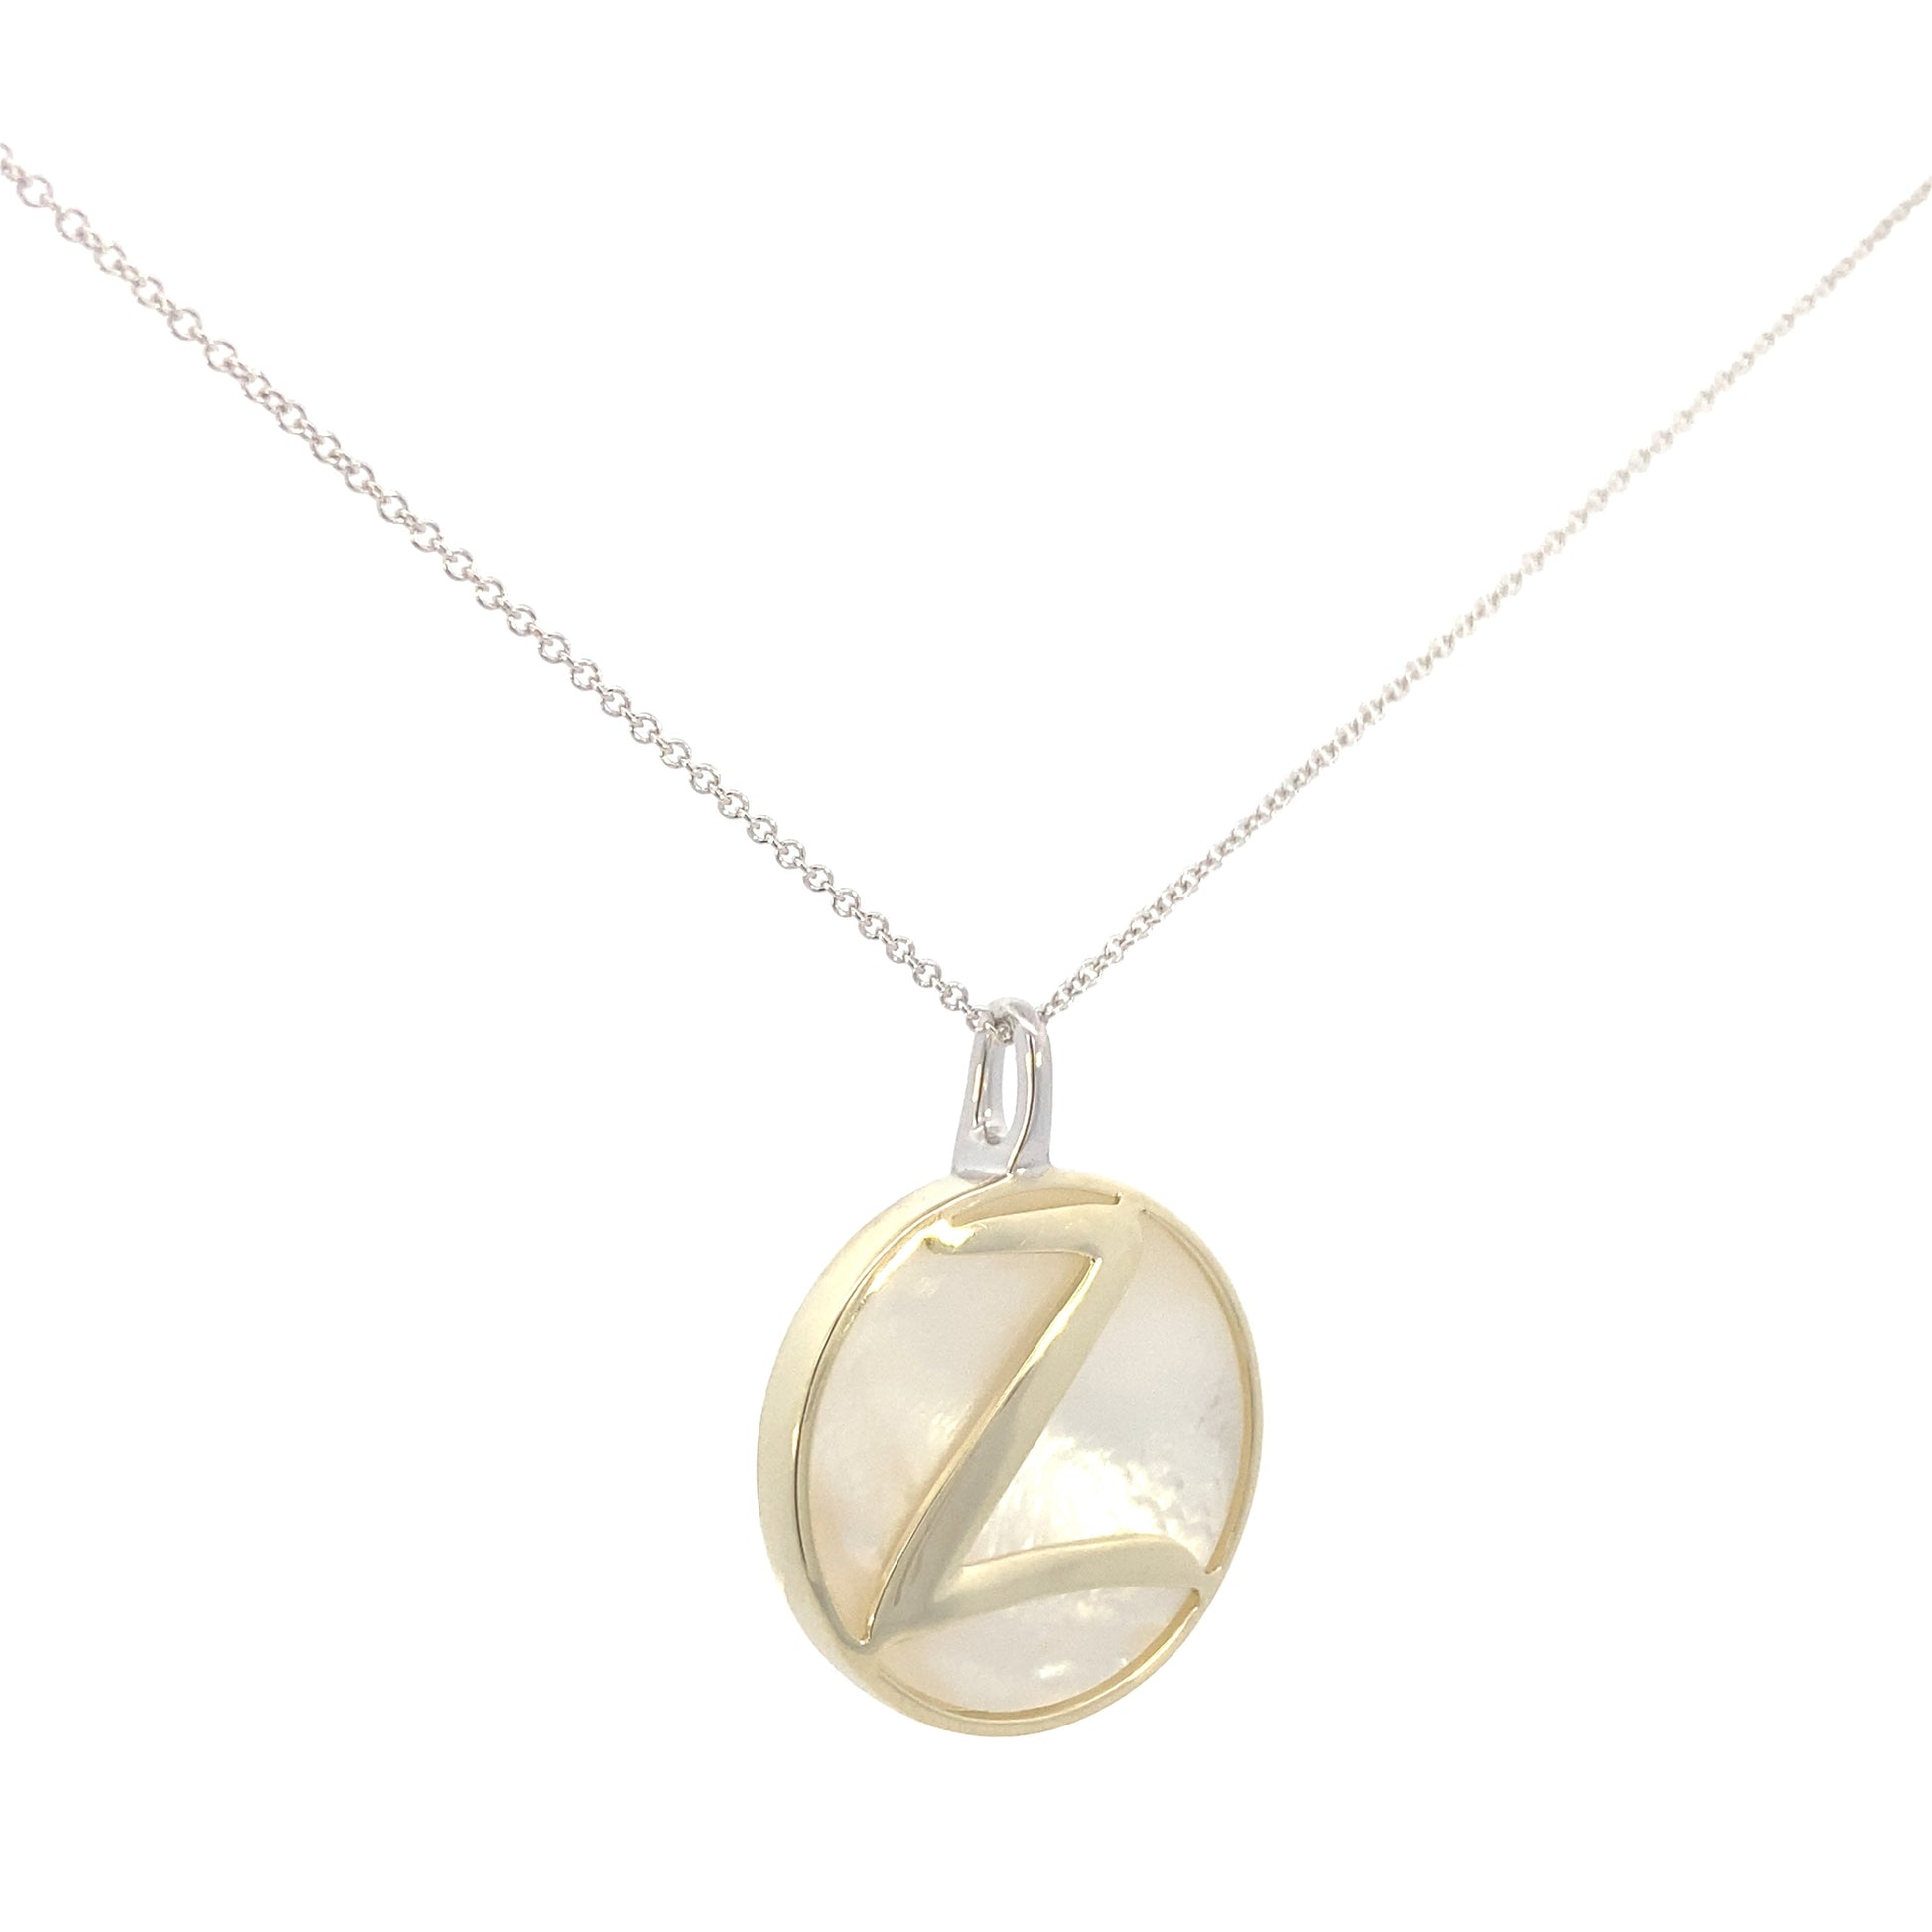 Zeghani 14K Diamond Zodiac Sign Constellation Pendant - Scorpio | Zeghani | Luby 